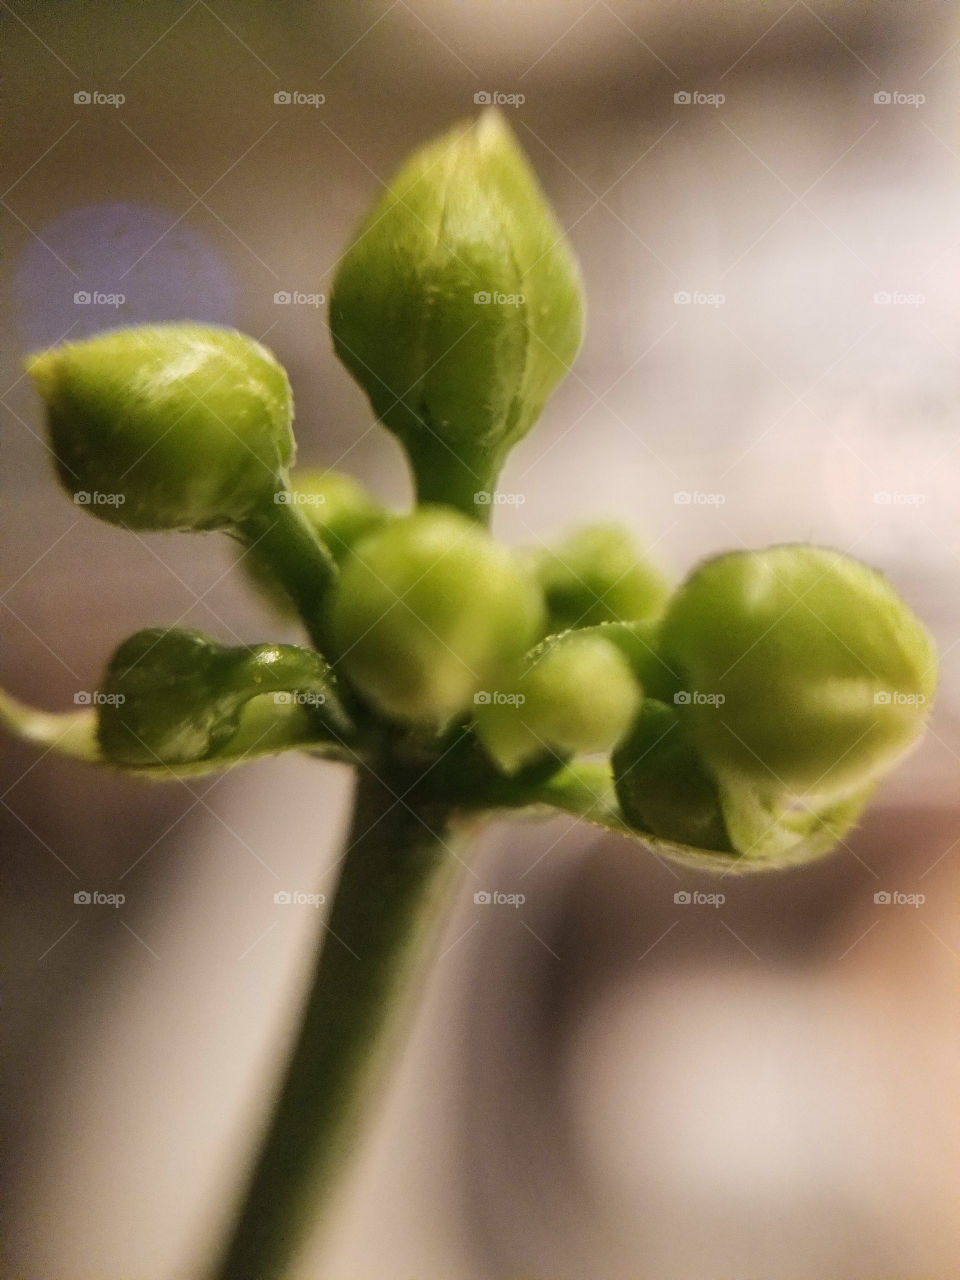 Venus flytrap flower buds